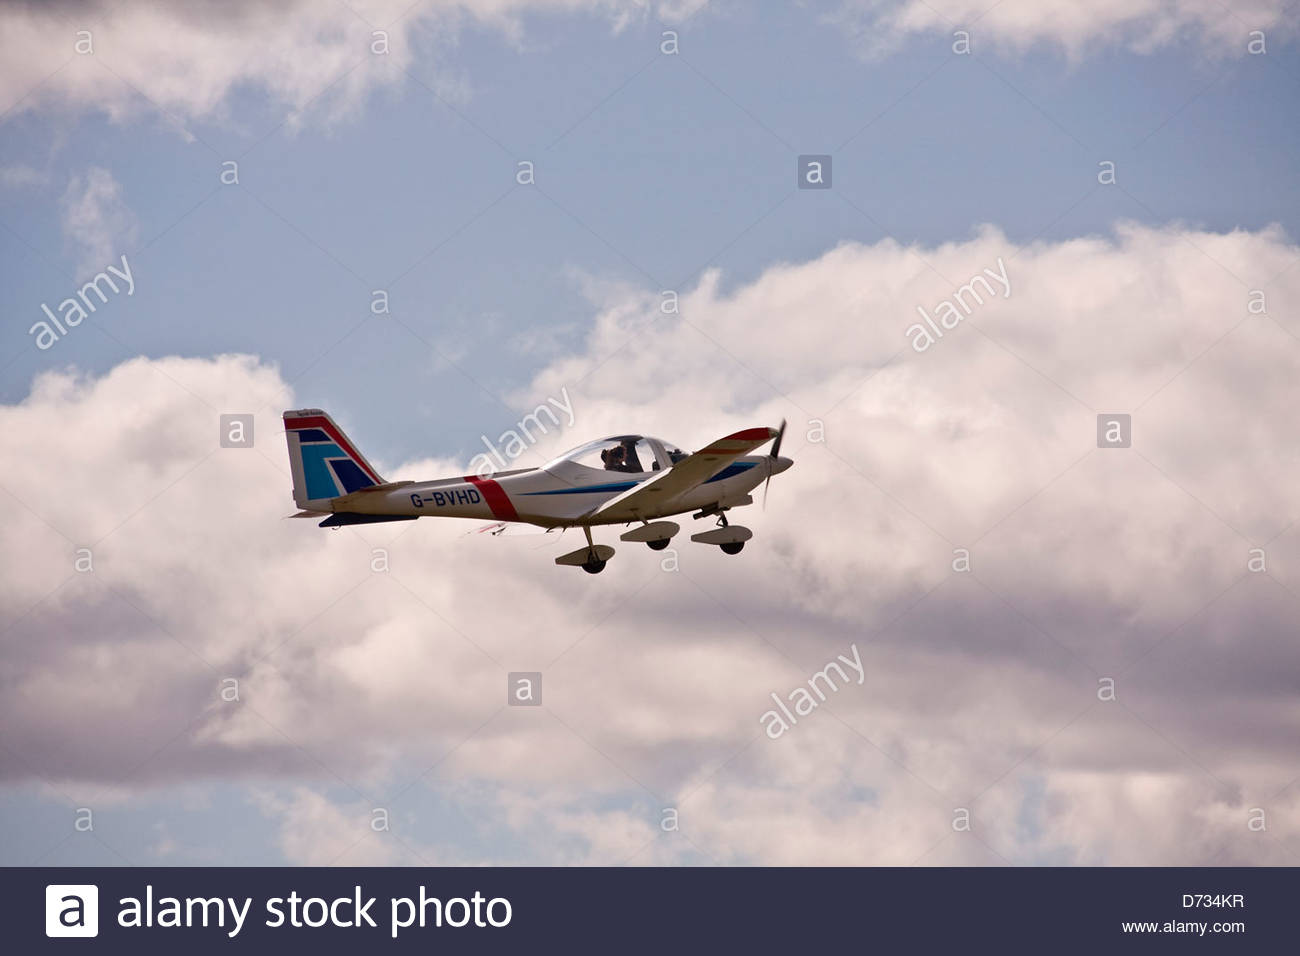 tayside-aviation-grob-g115-tutor-t1-heron-g-bvhg-aircraft-flying-above-D734KR.jpg